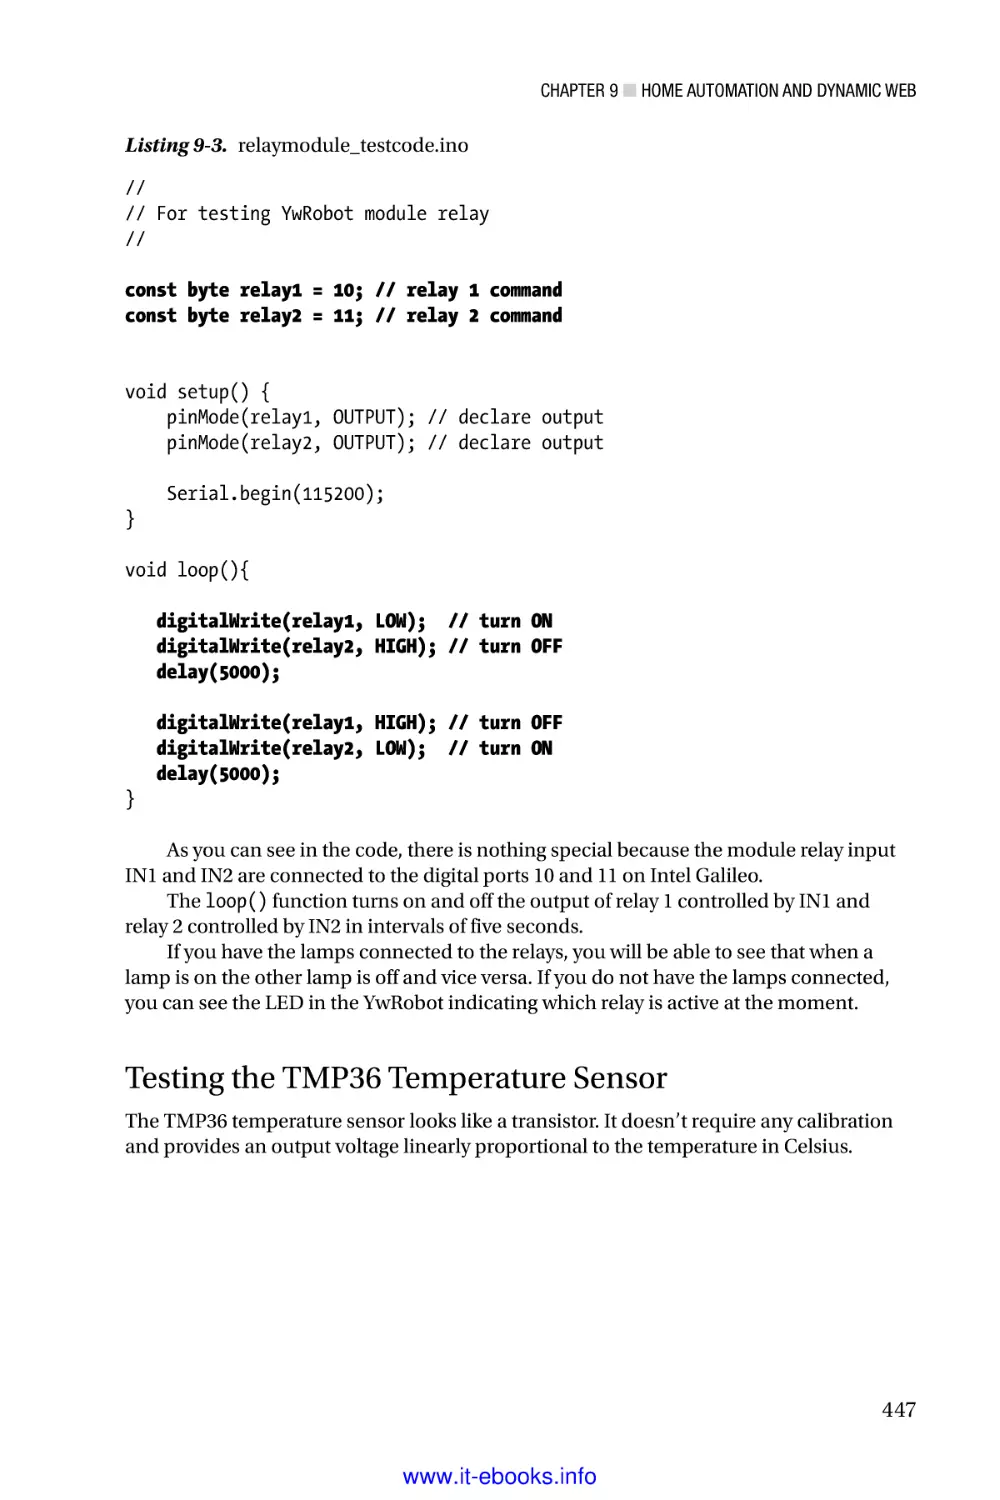 Testing the TMP36 Temperature Sensor